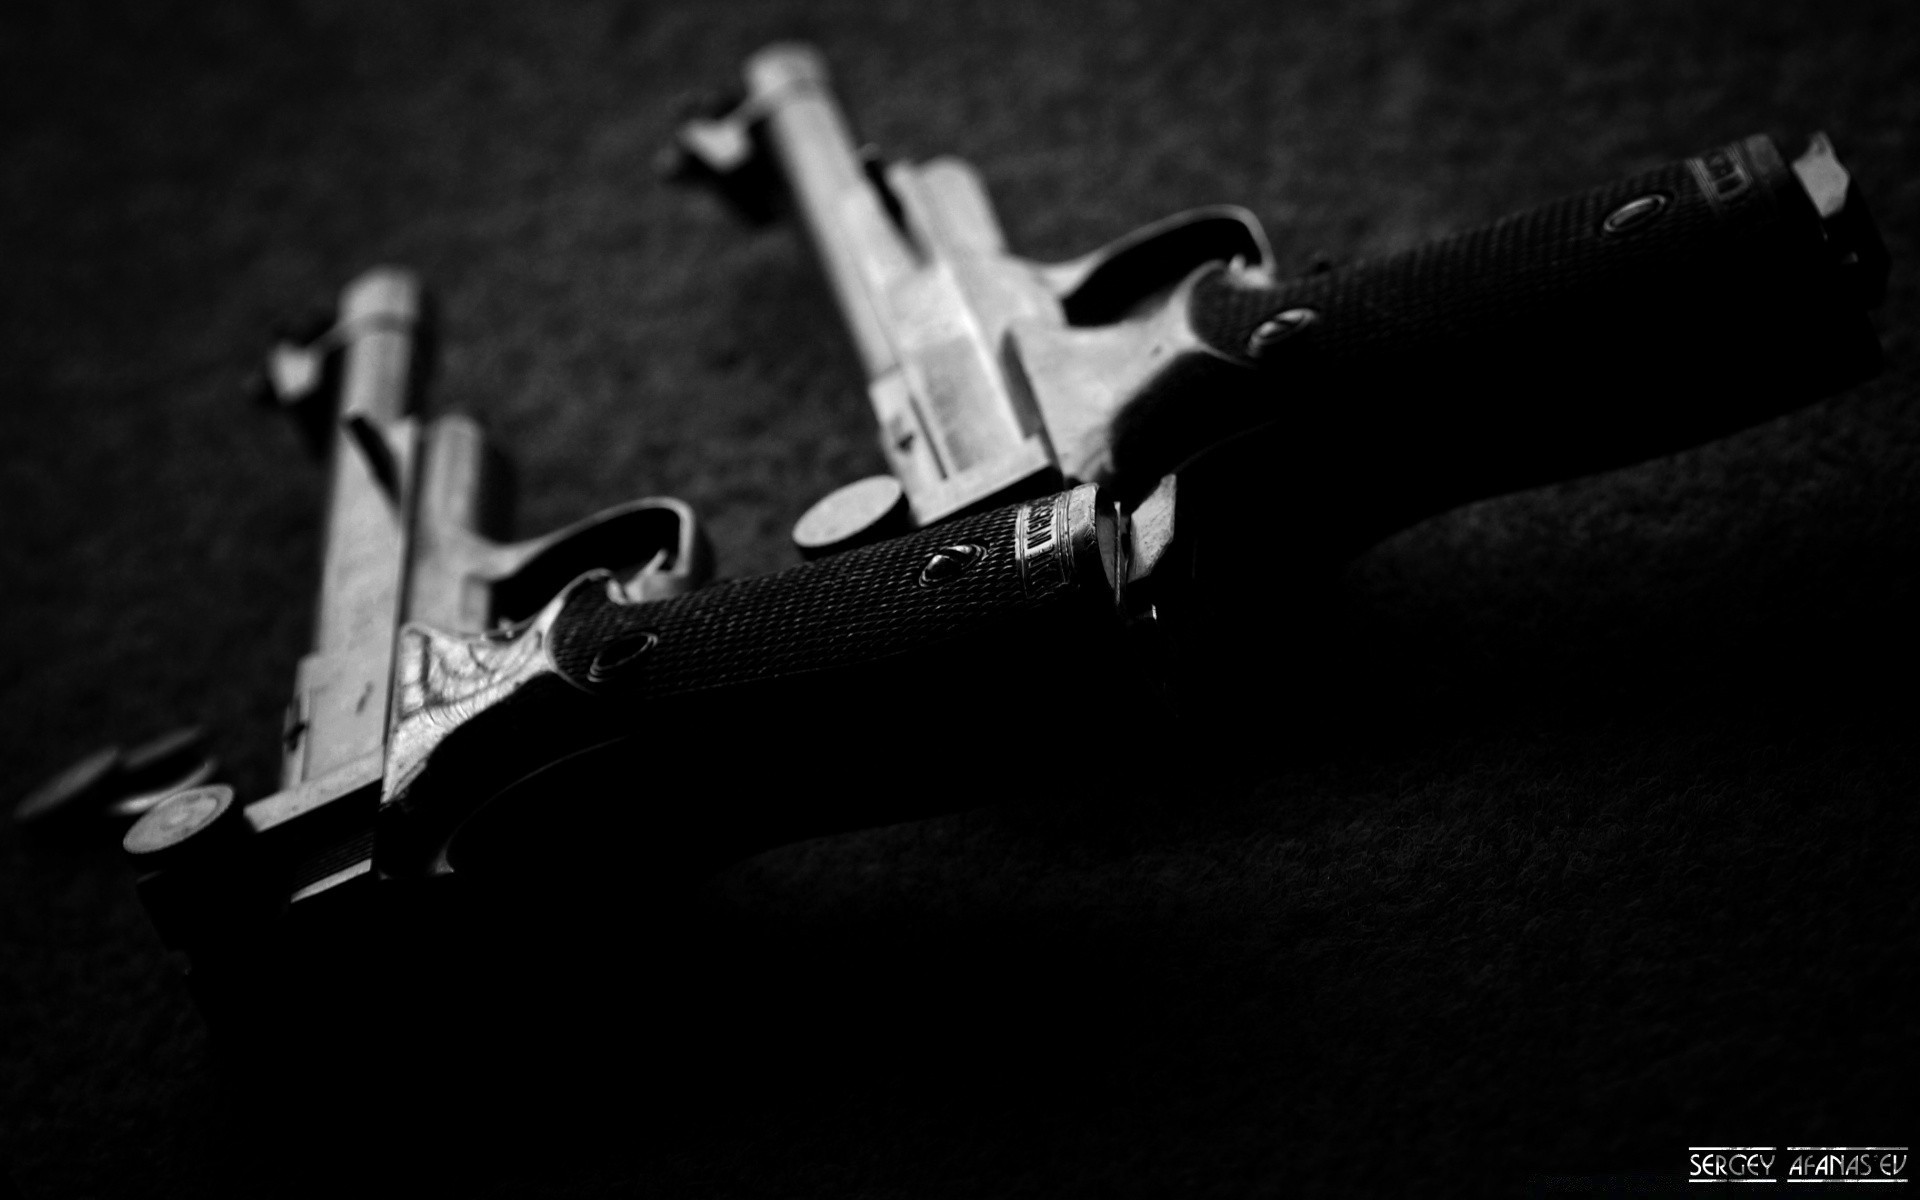 weapons and army gun weapon pistol offense force rifle war ammunition police danger military bullet revolver trigger shotgun monochrome army fear gauge